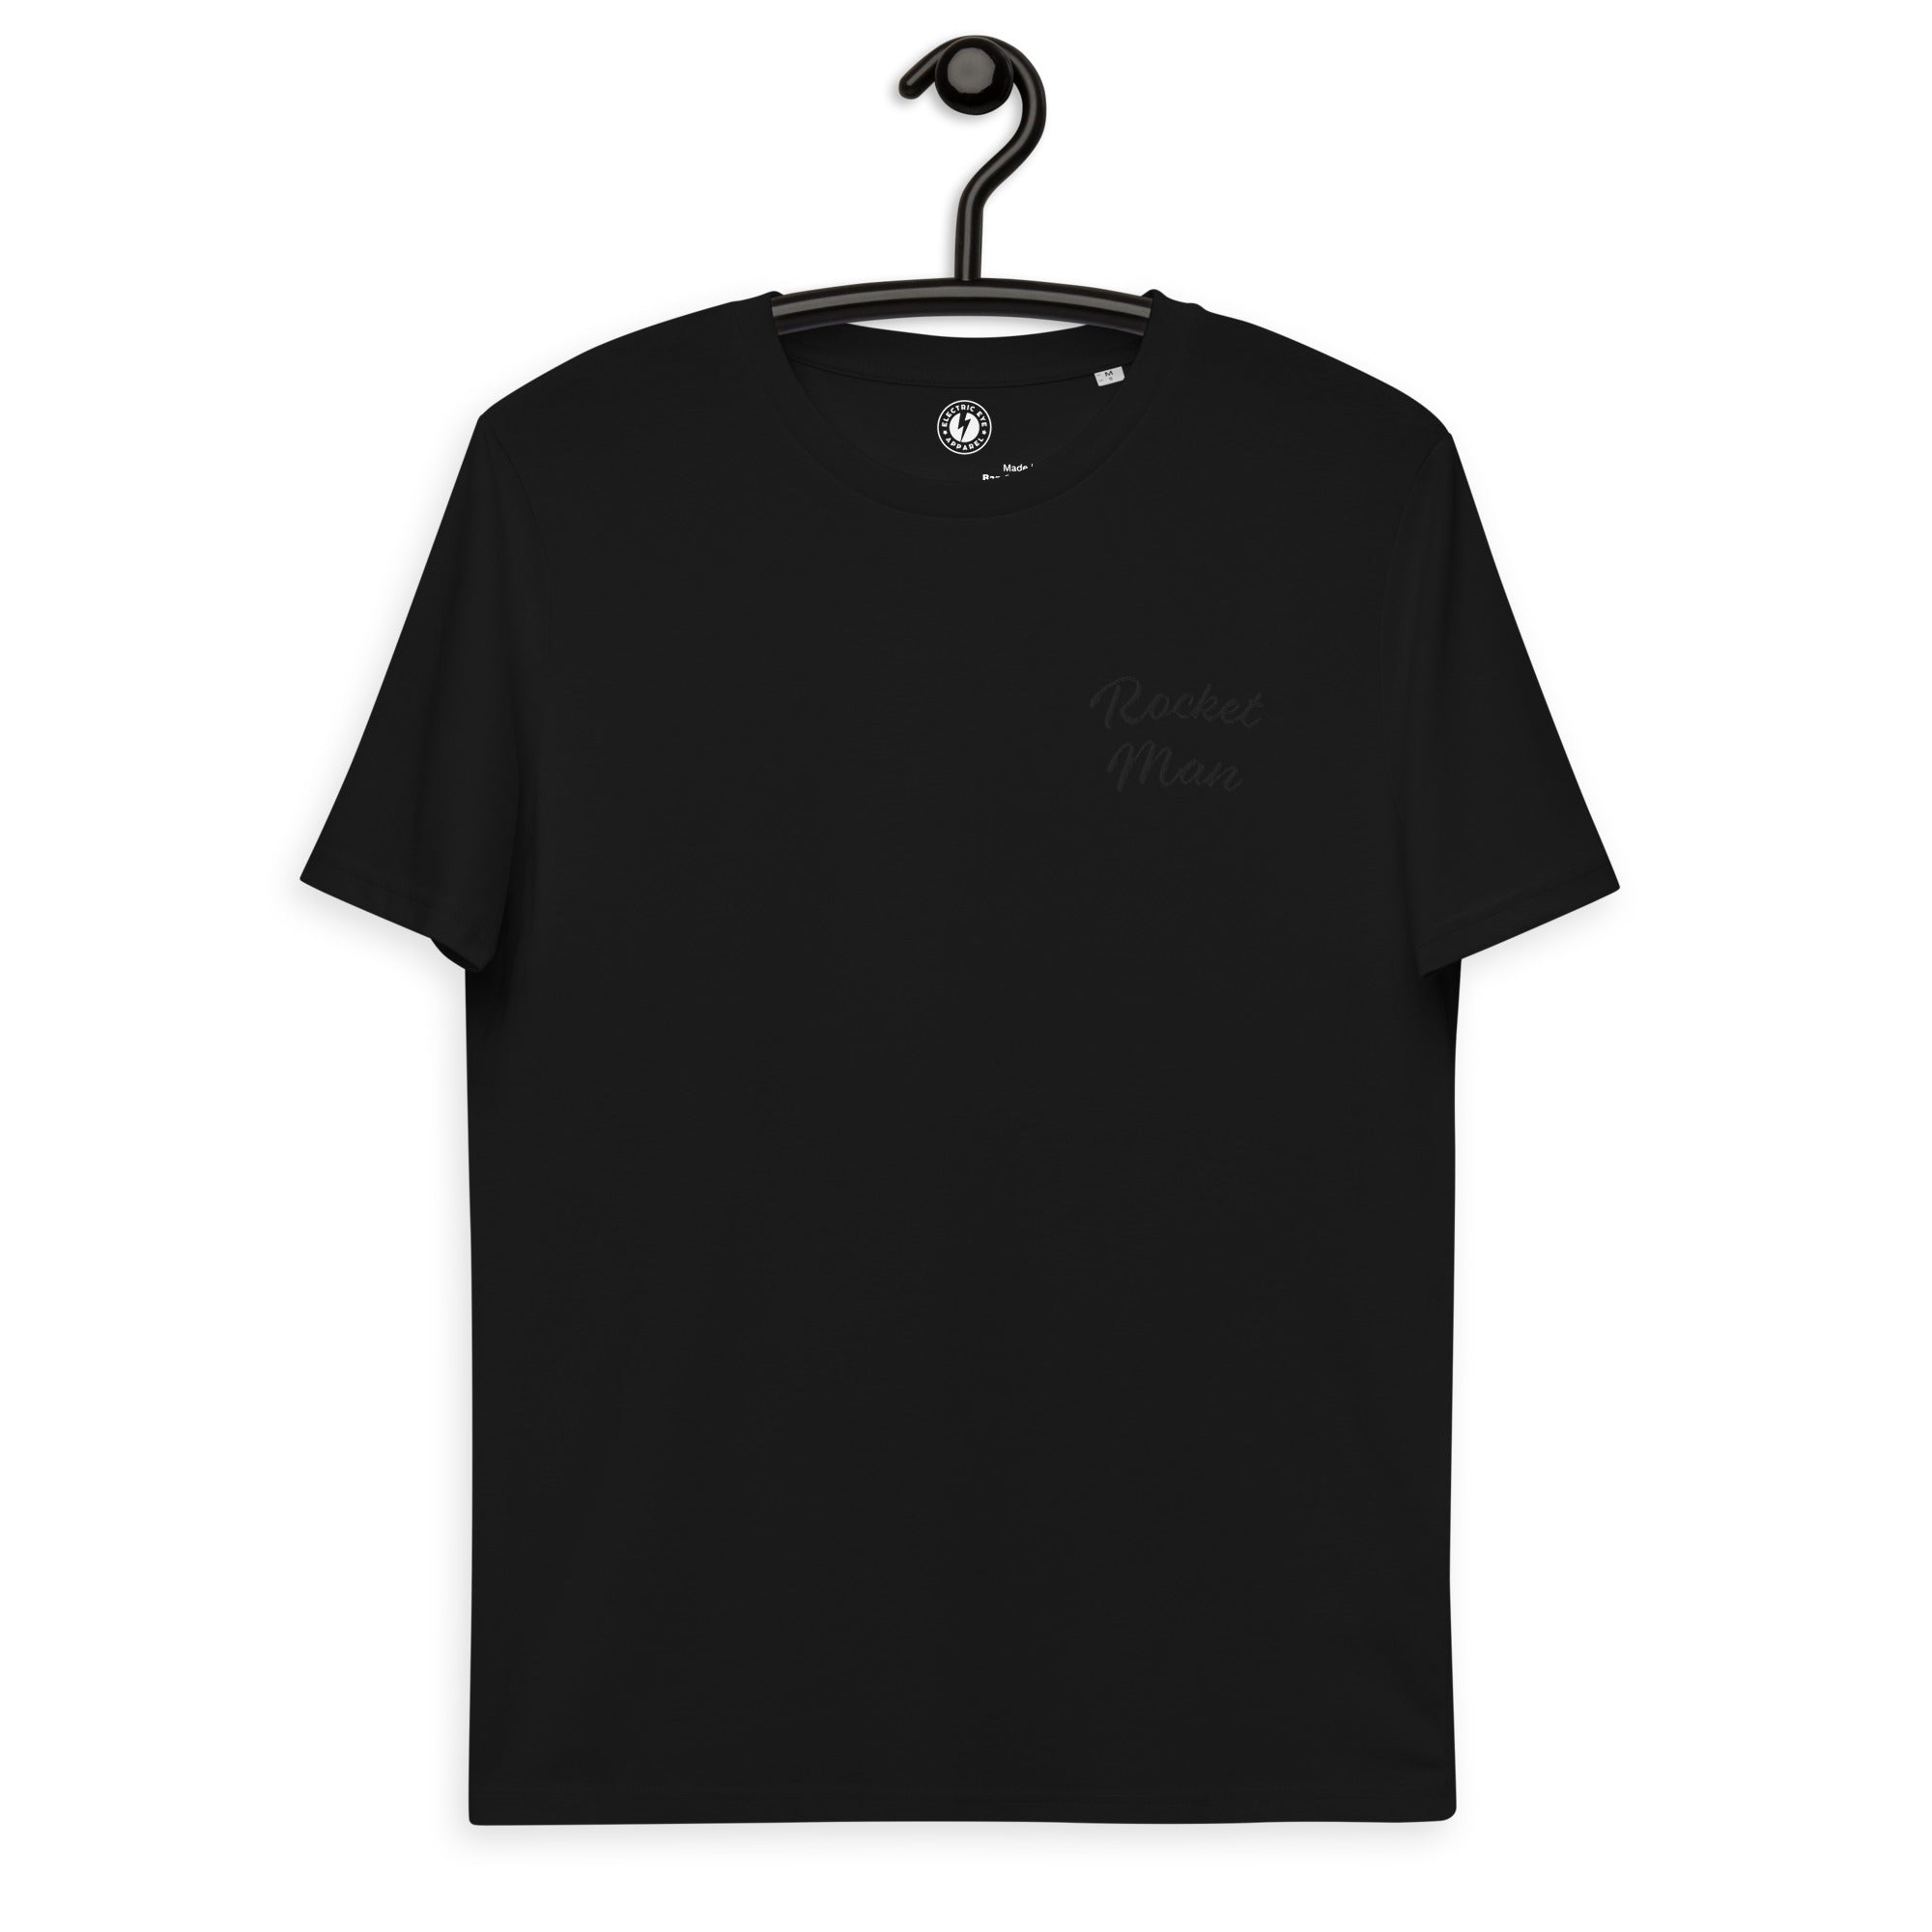 Rocket Man Left Chest  Embroidered Unisex organic cotton t-shirt - black thread